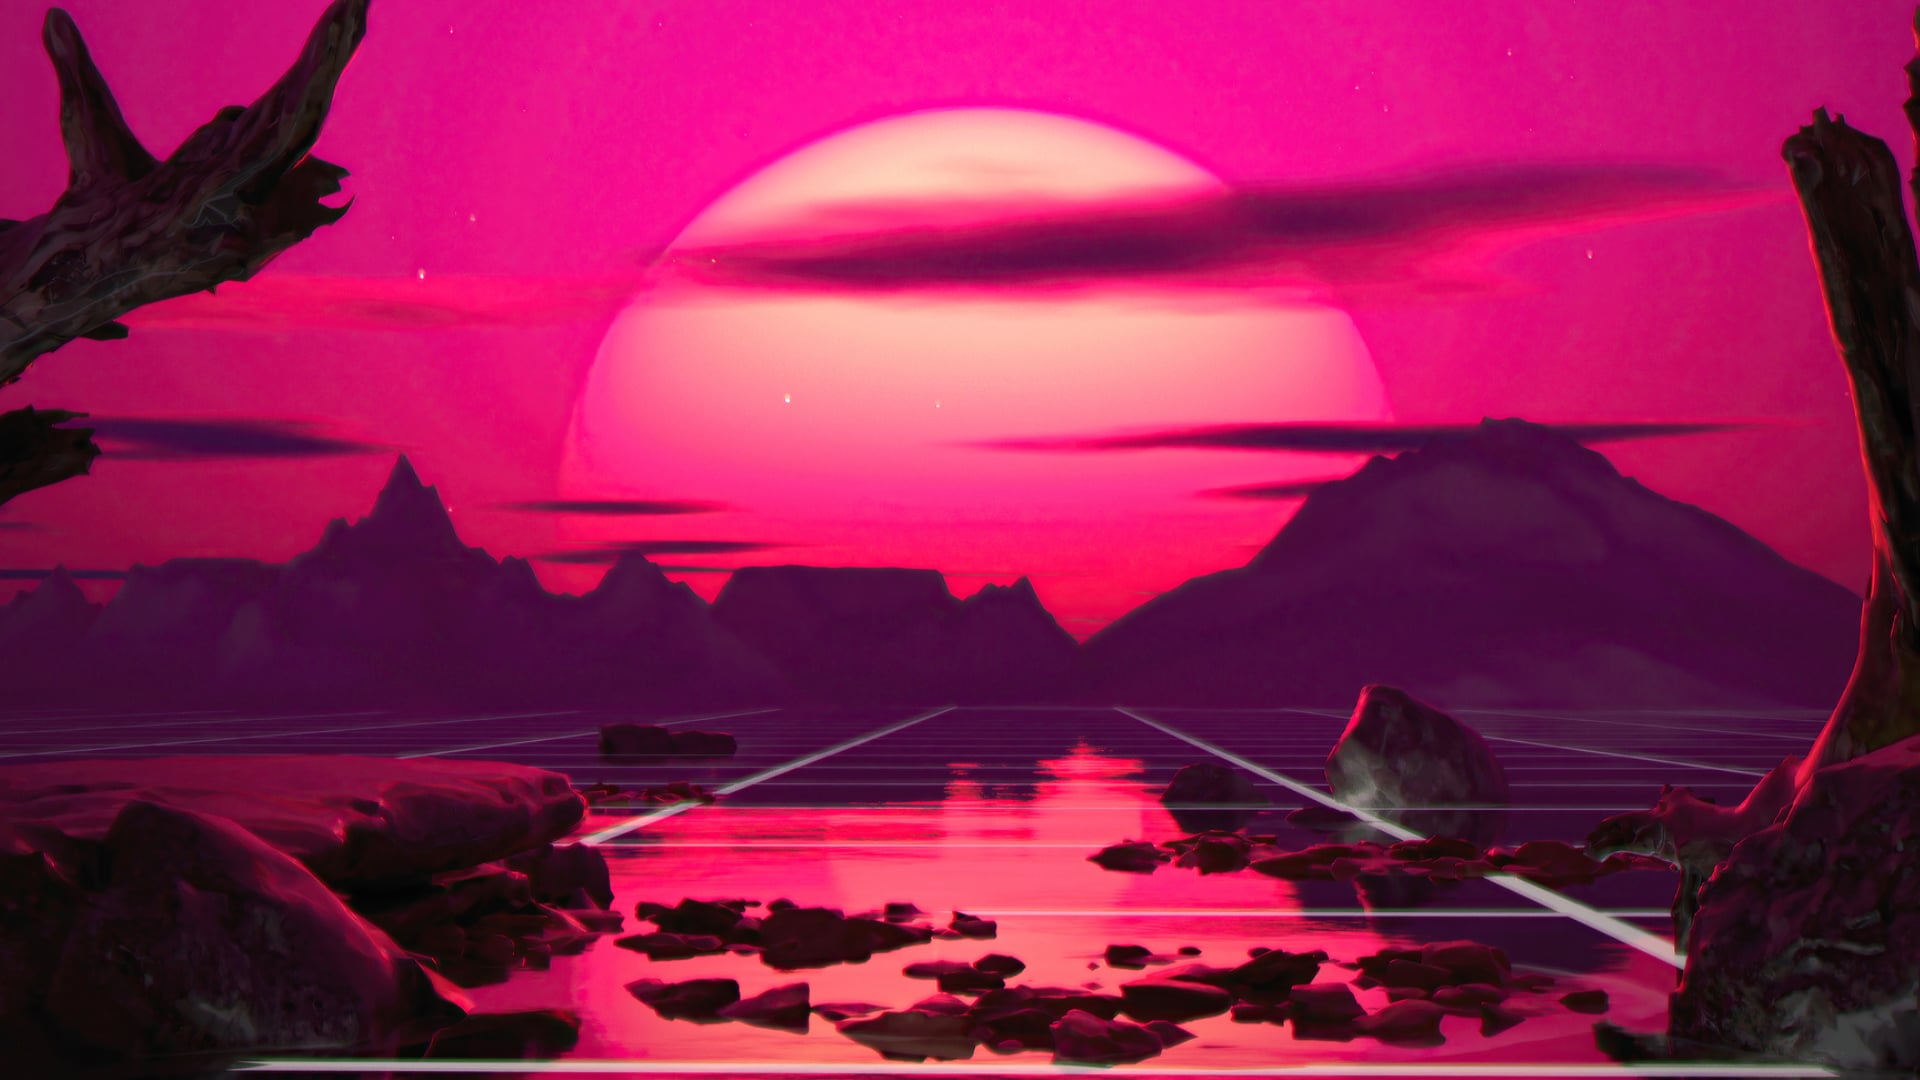 Digital Art Sunset at 1024 x 1024 iPad size wallpapers HD quality